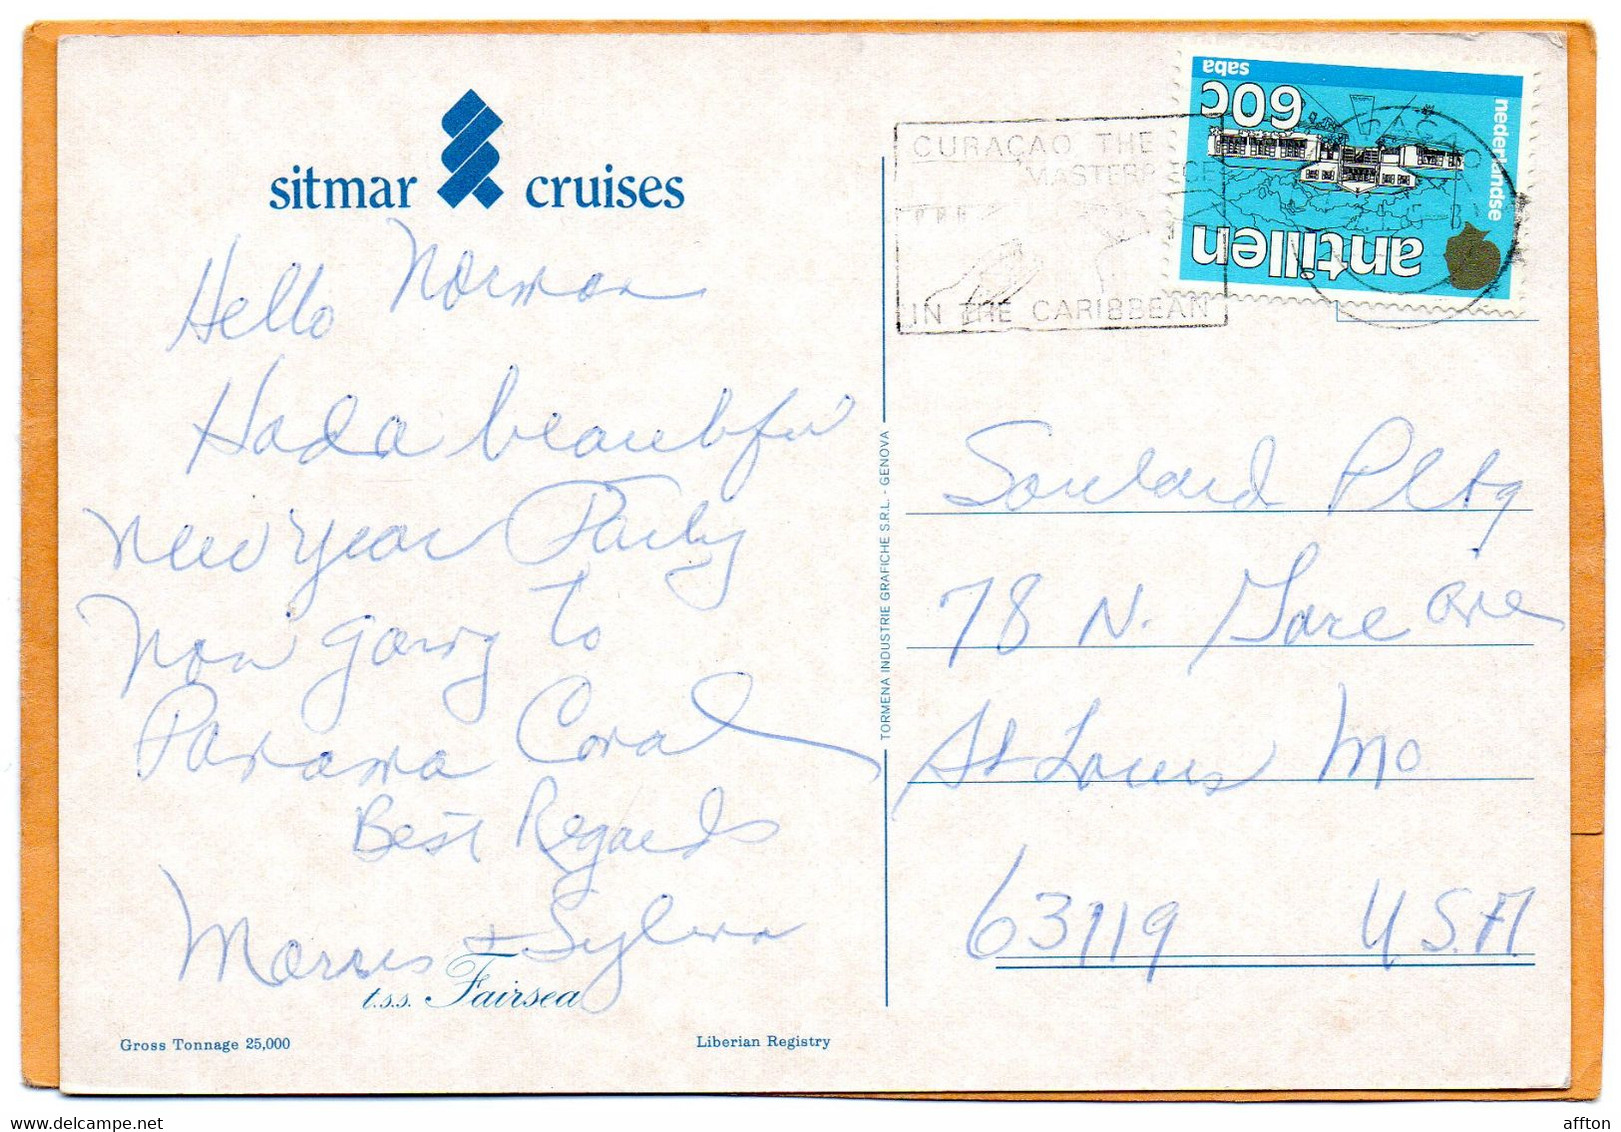 Aruba DWI Old Postcard Mailed - Aruba